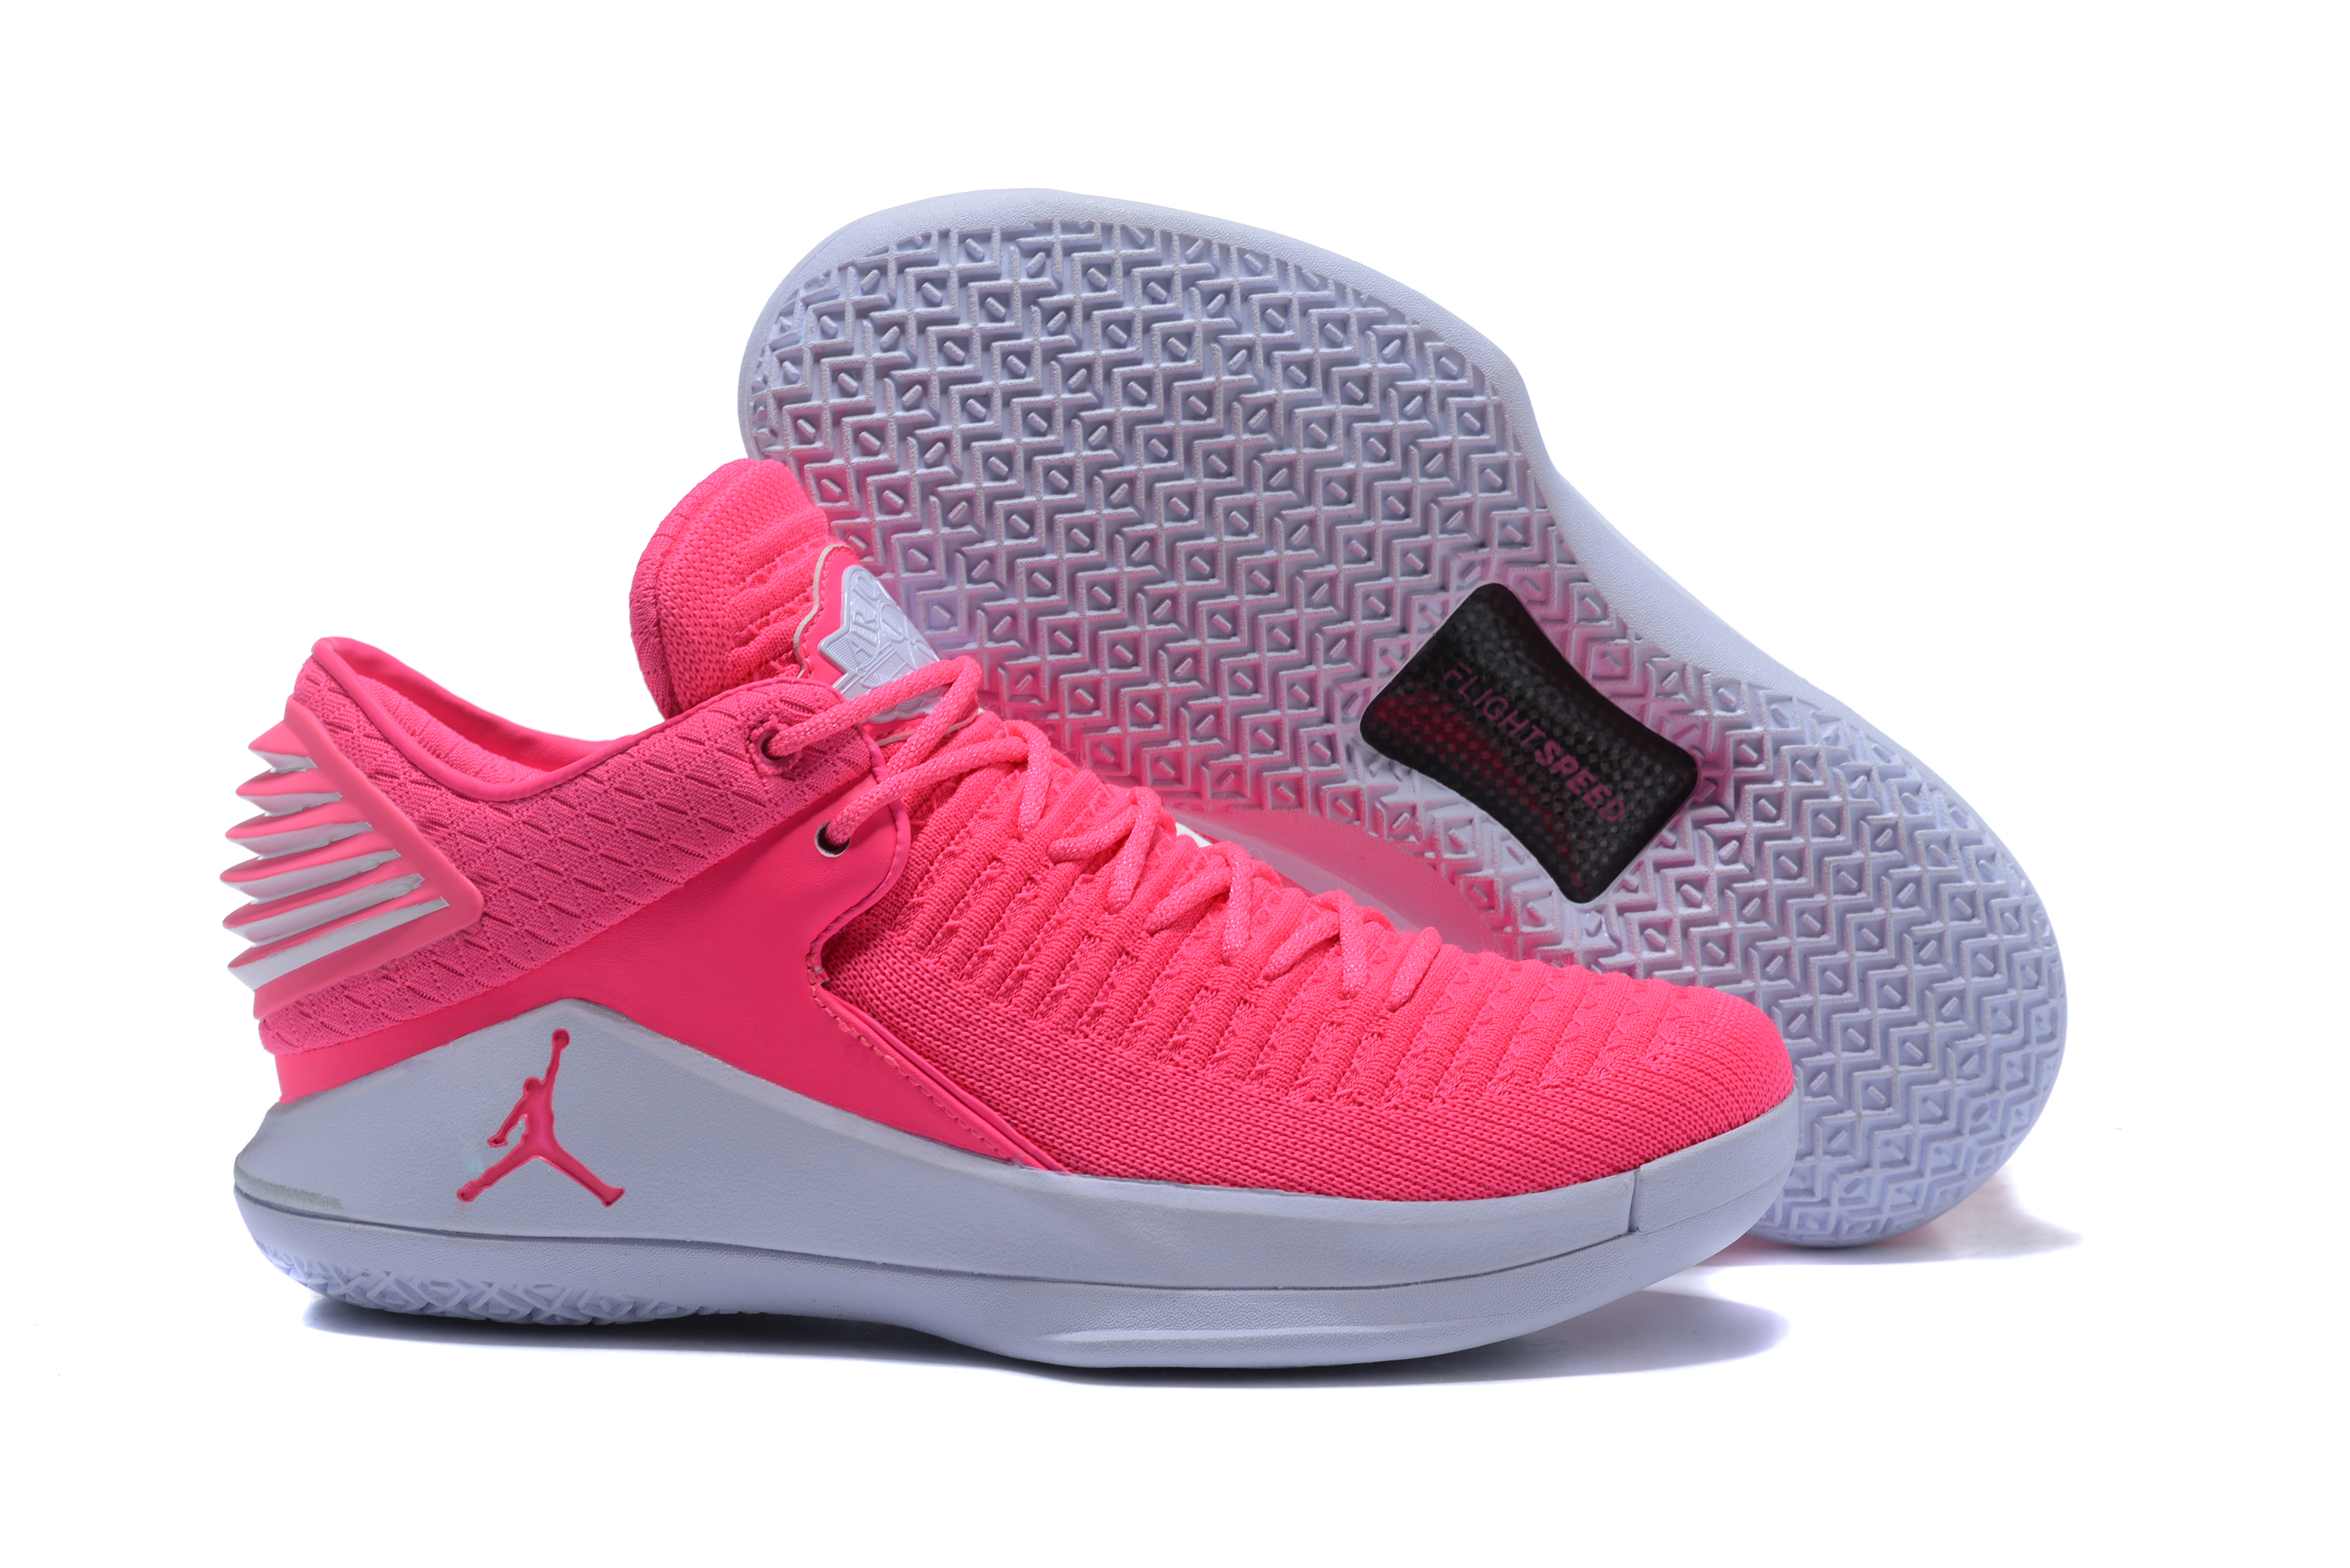 Air Jordan 32 Breast Cancer Shoes